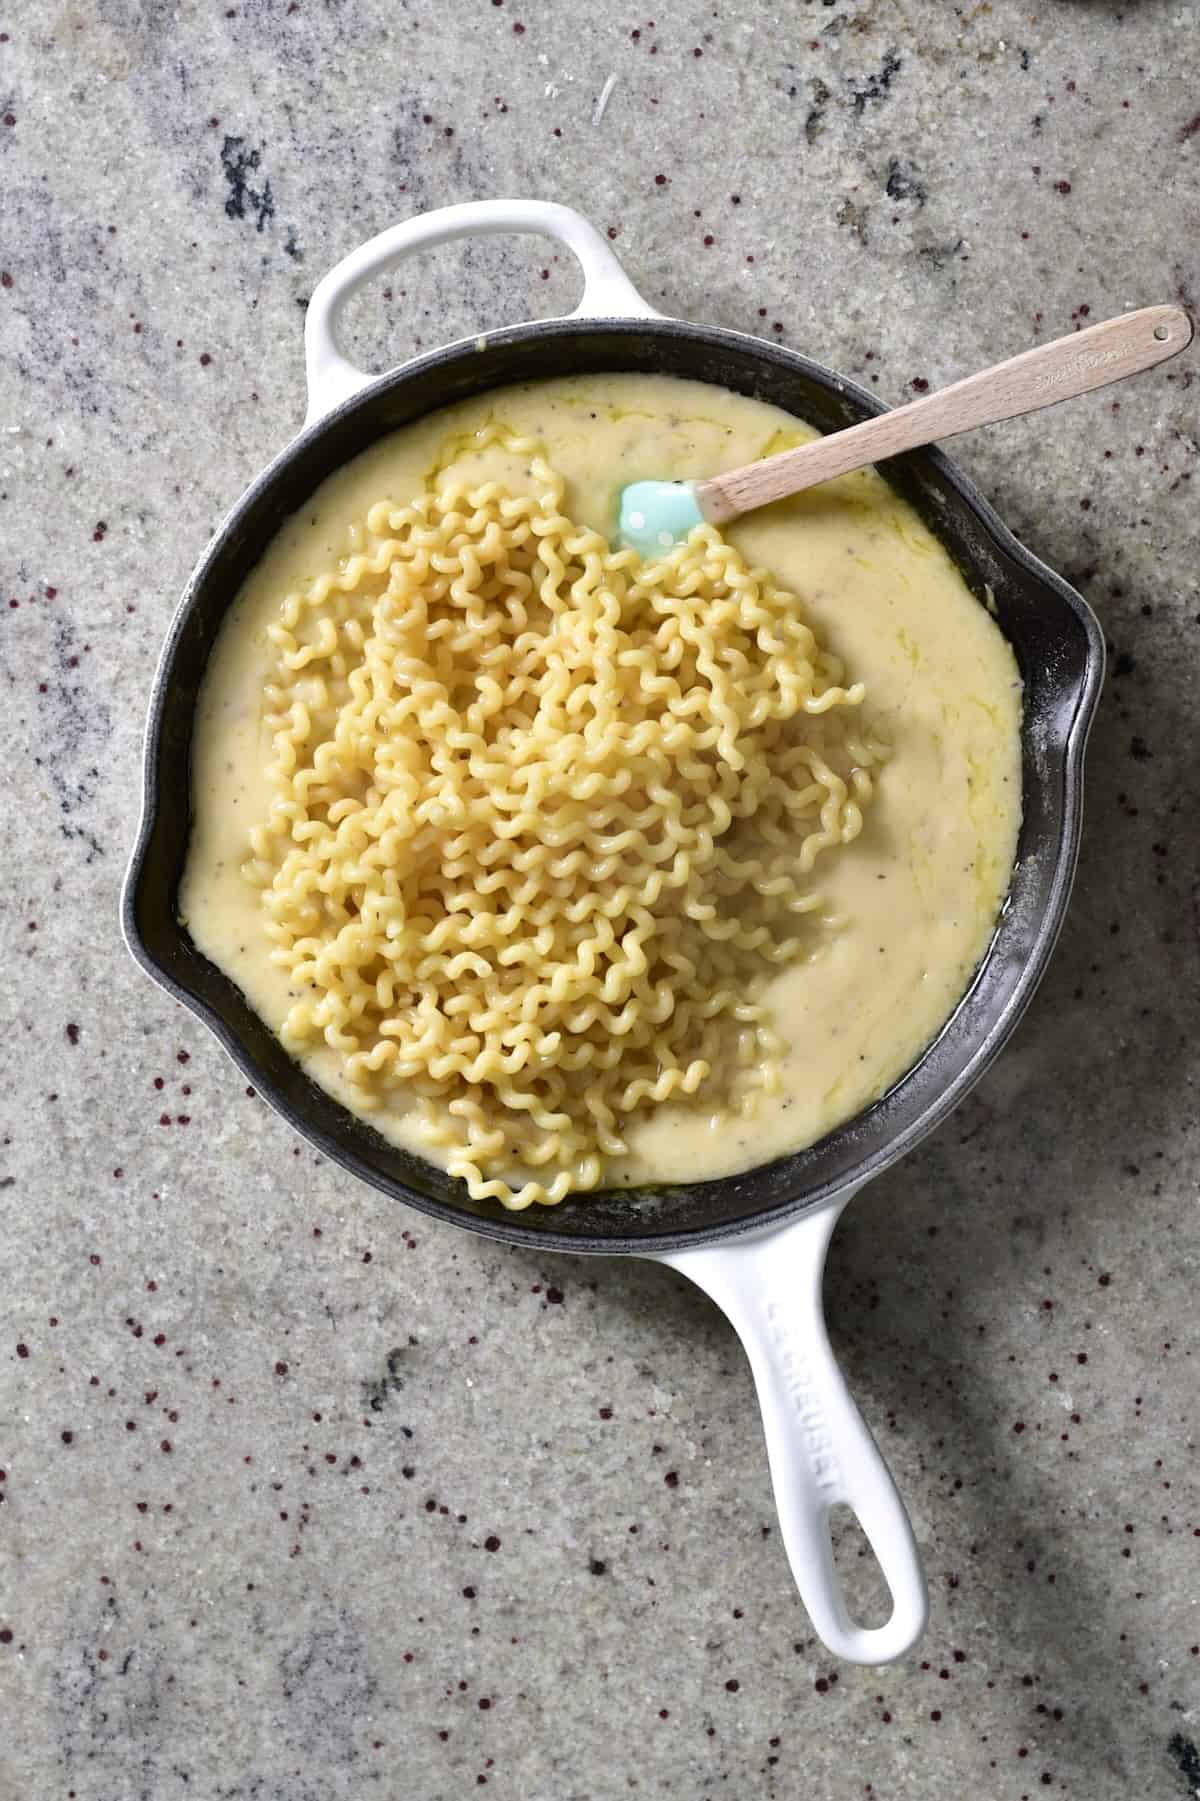 Mixing garlic cream sauce with pasta